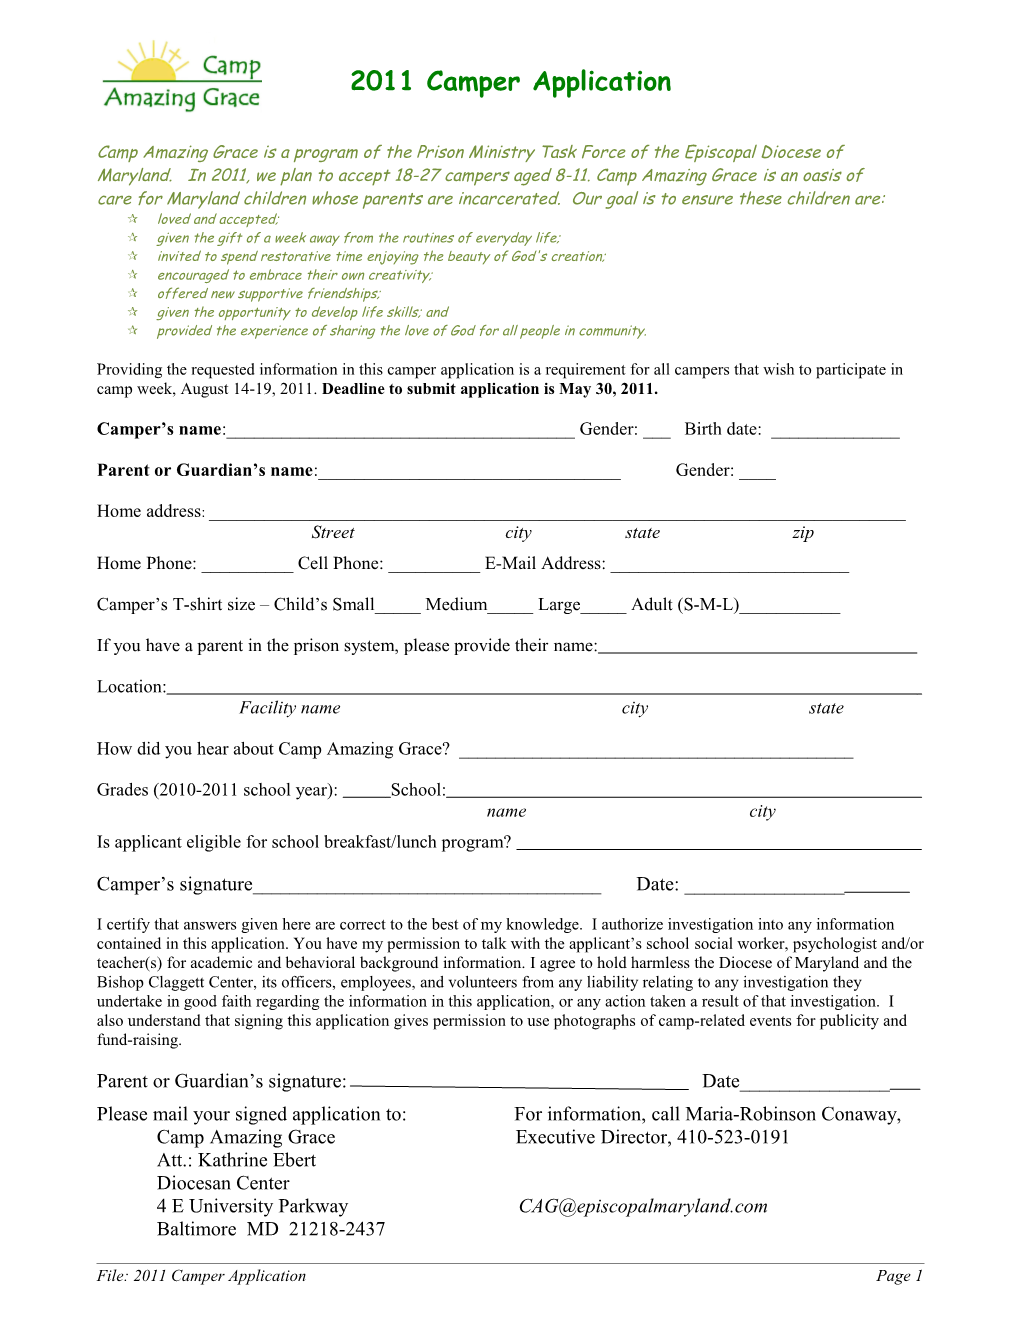 Application for Bishop Claggett Center